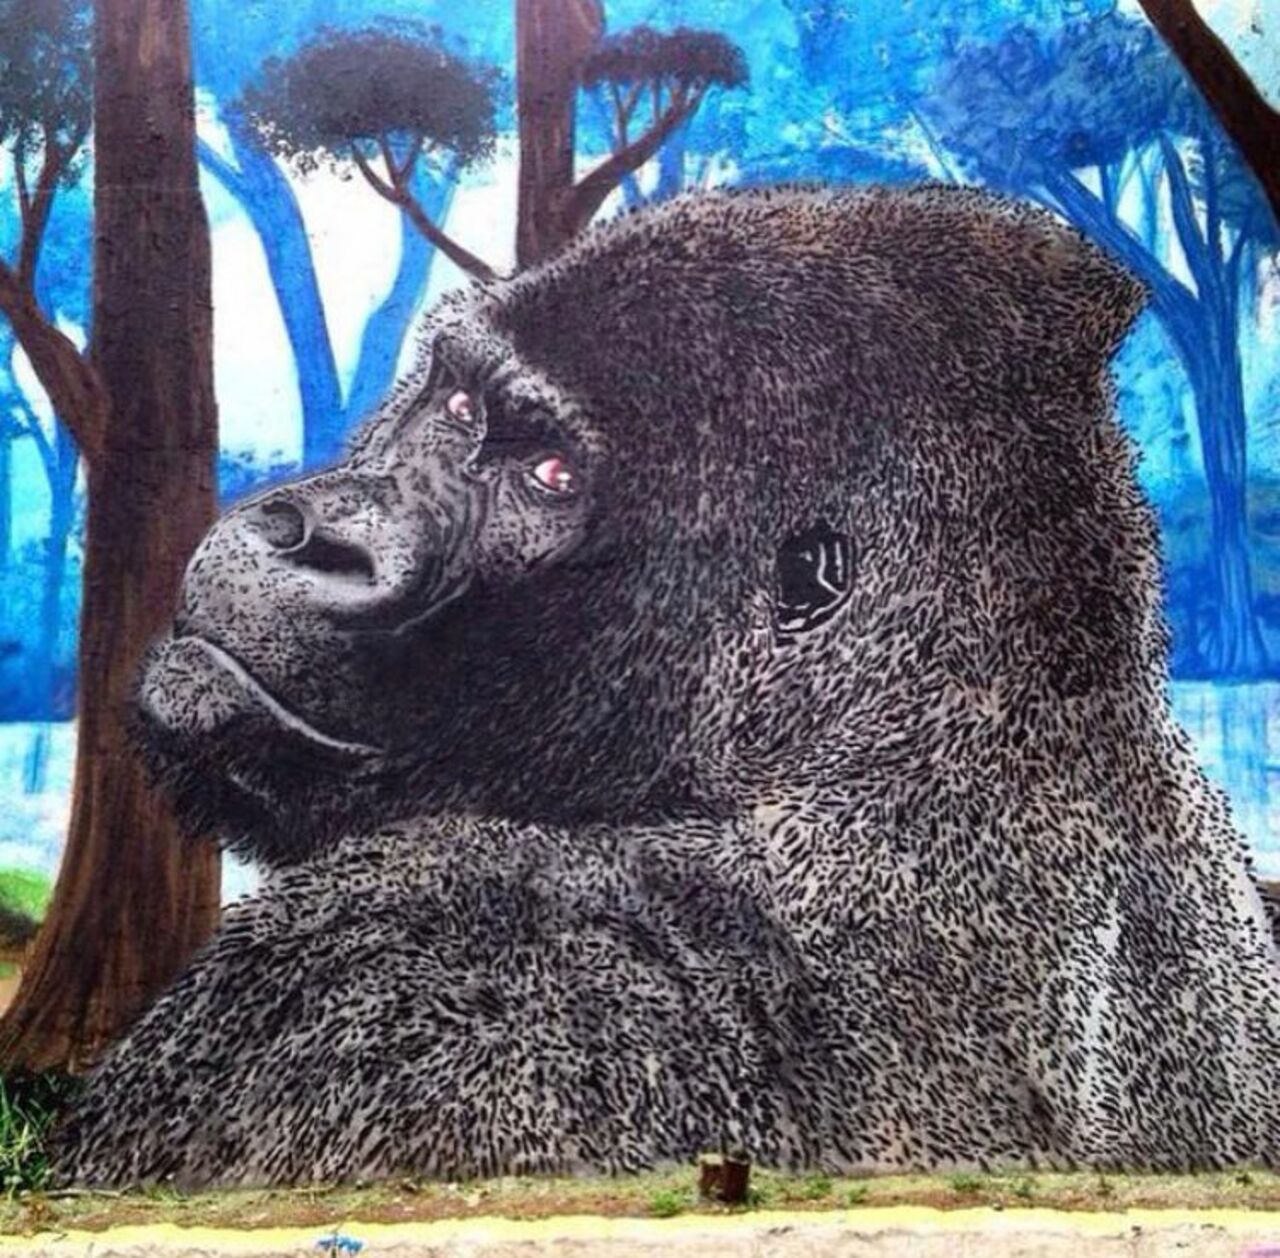 New work by Thassio in Sao Paolo, Brasil #streetart #mural #graffiti #art https://t.co/hOZAlR6whB